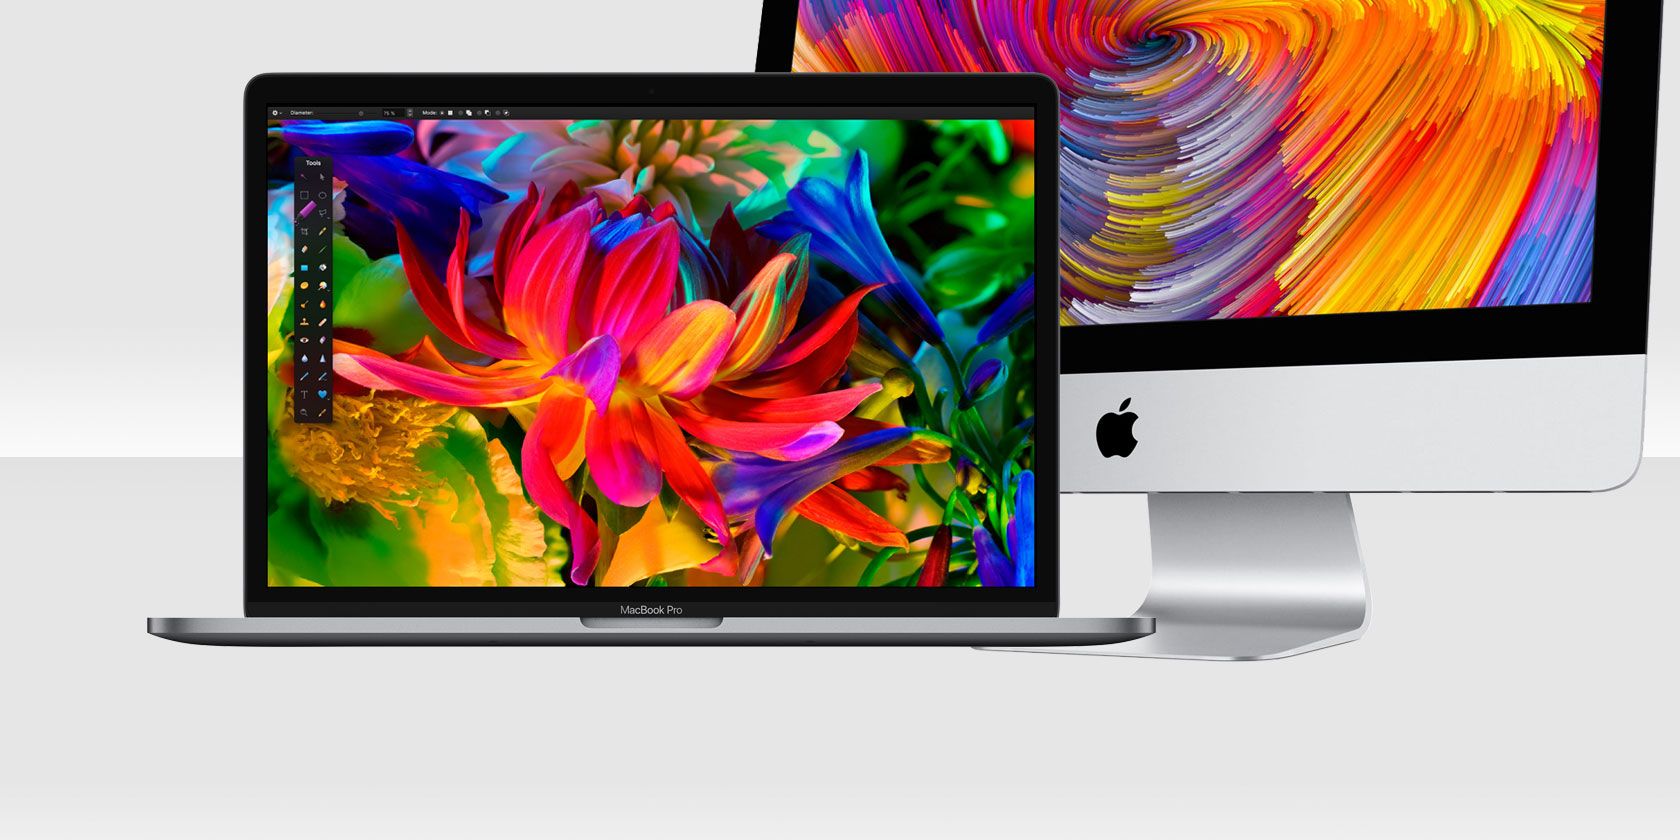 MacBook vs. iMac A Comparison Guide to Help You Decide